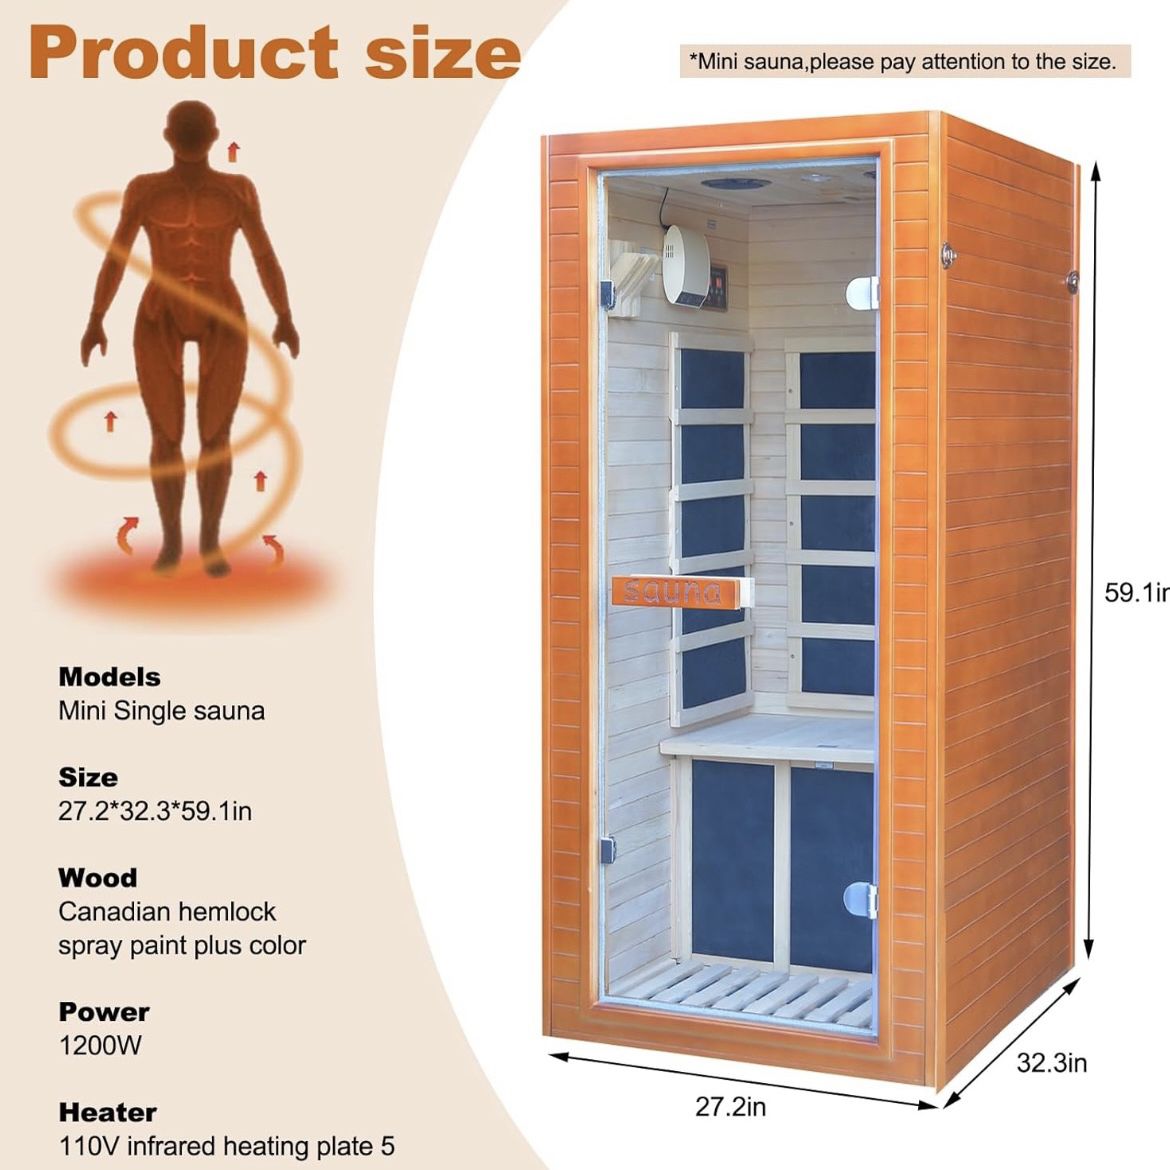 Far Infrared Home Sauna Mini Indoor Dry Personal Sauna Room,Hemlock Wood Sauna,with 1200W 5 Heating Panels, Heating Machine Equipment for Home Workout